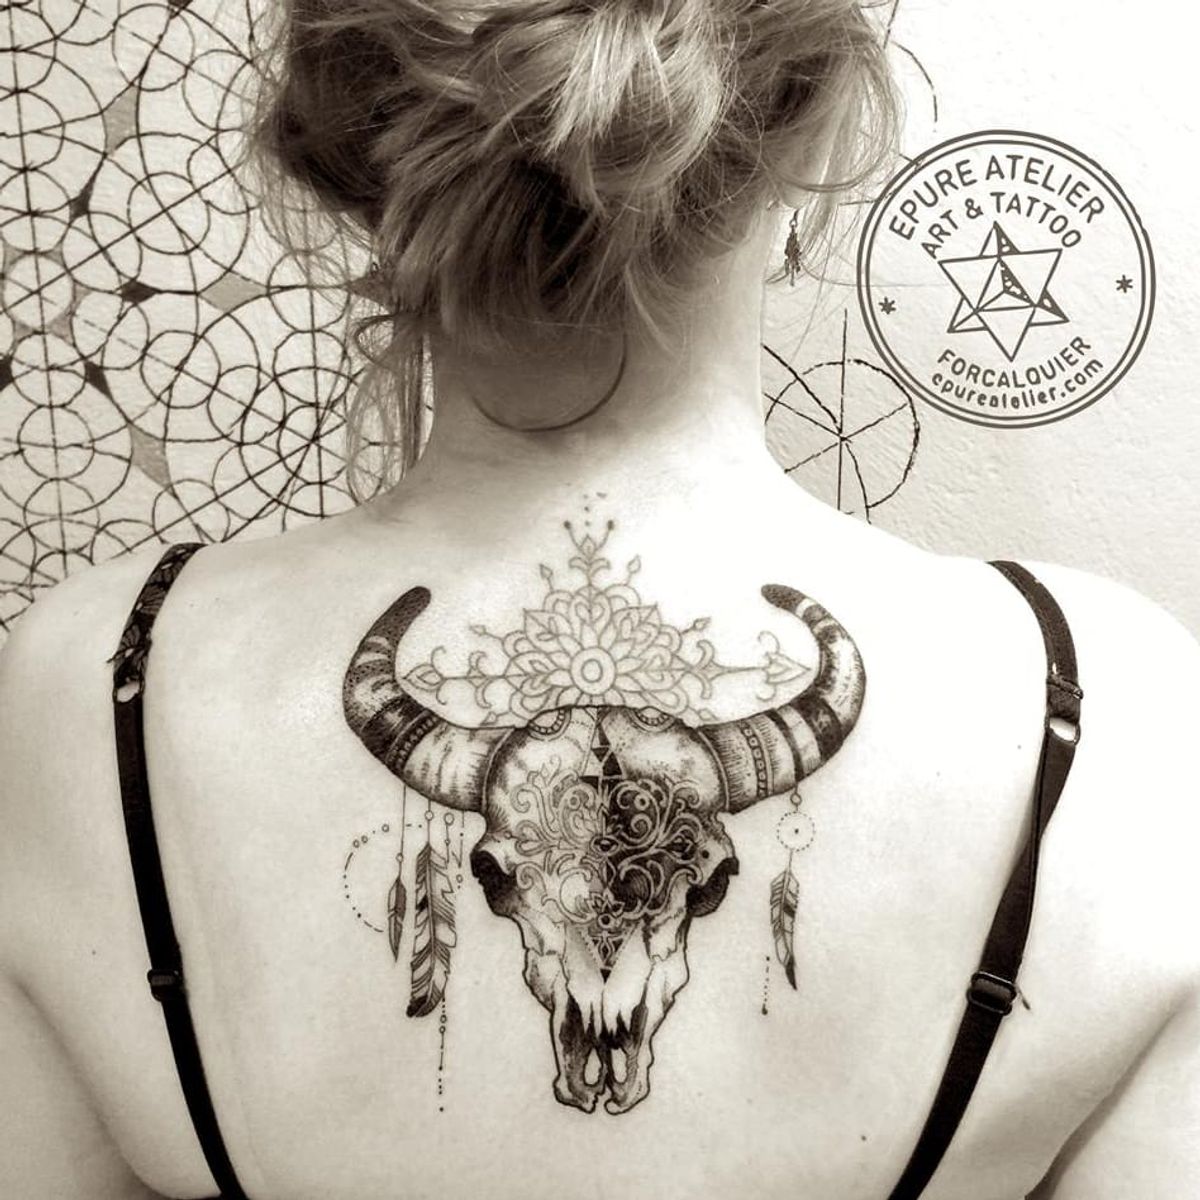 Tattoo uploaded by JenTheRipper • Cow skull tattoo by Marie Roura  #MarieRoura #graphic #spiritual #cowskull #animalskull #skull • Tattoodo